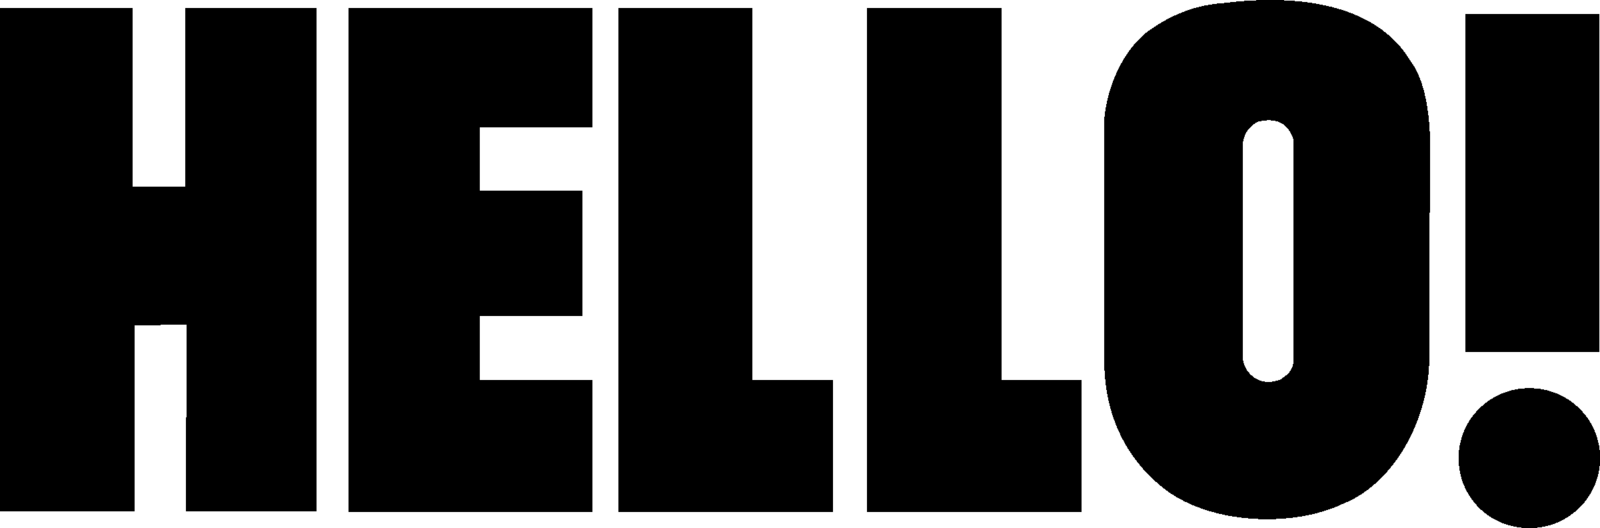 Black OK logo